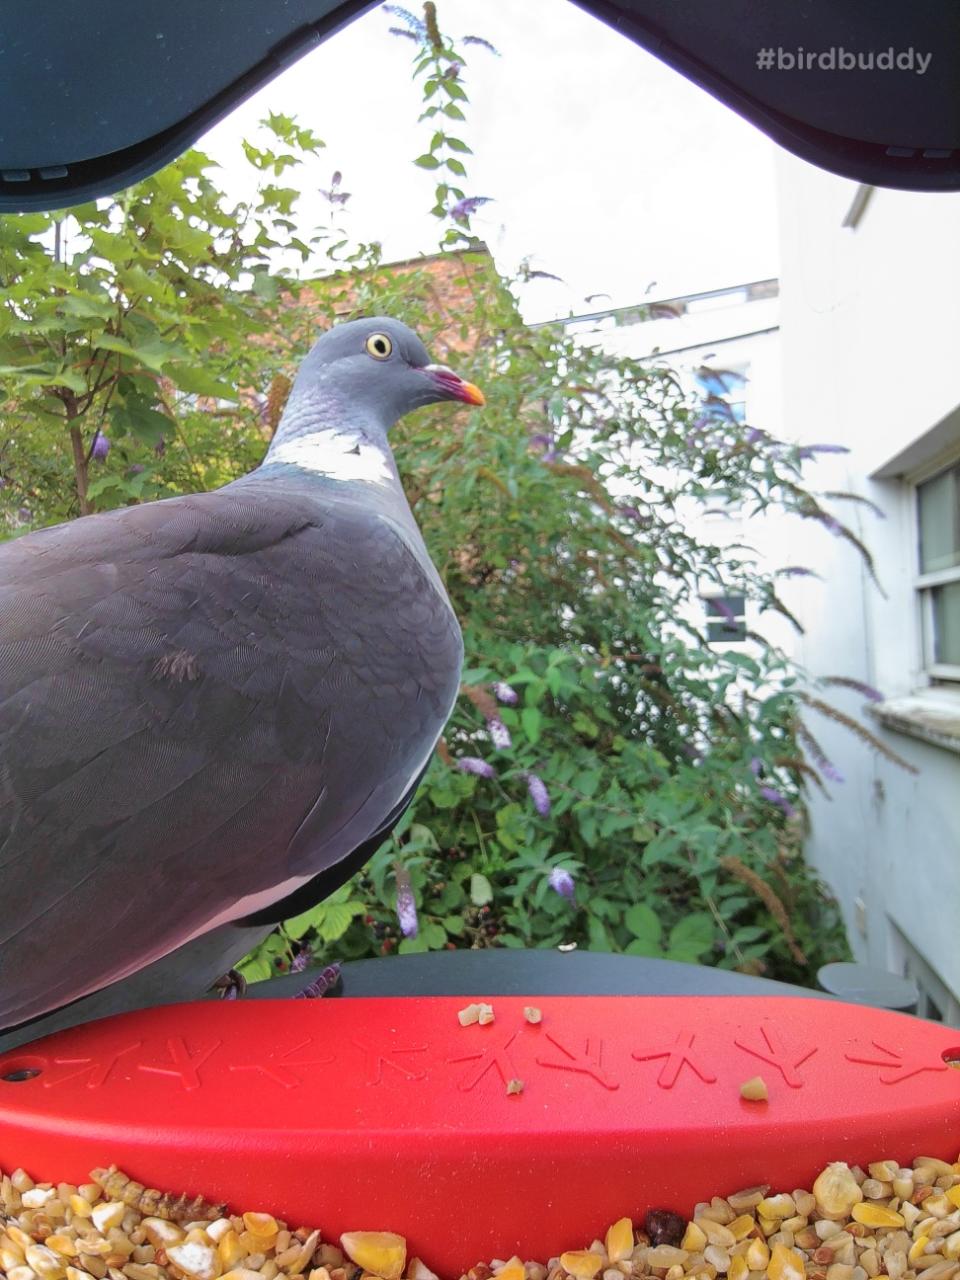 Bidybuddy photo of a pigeon